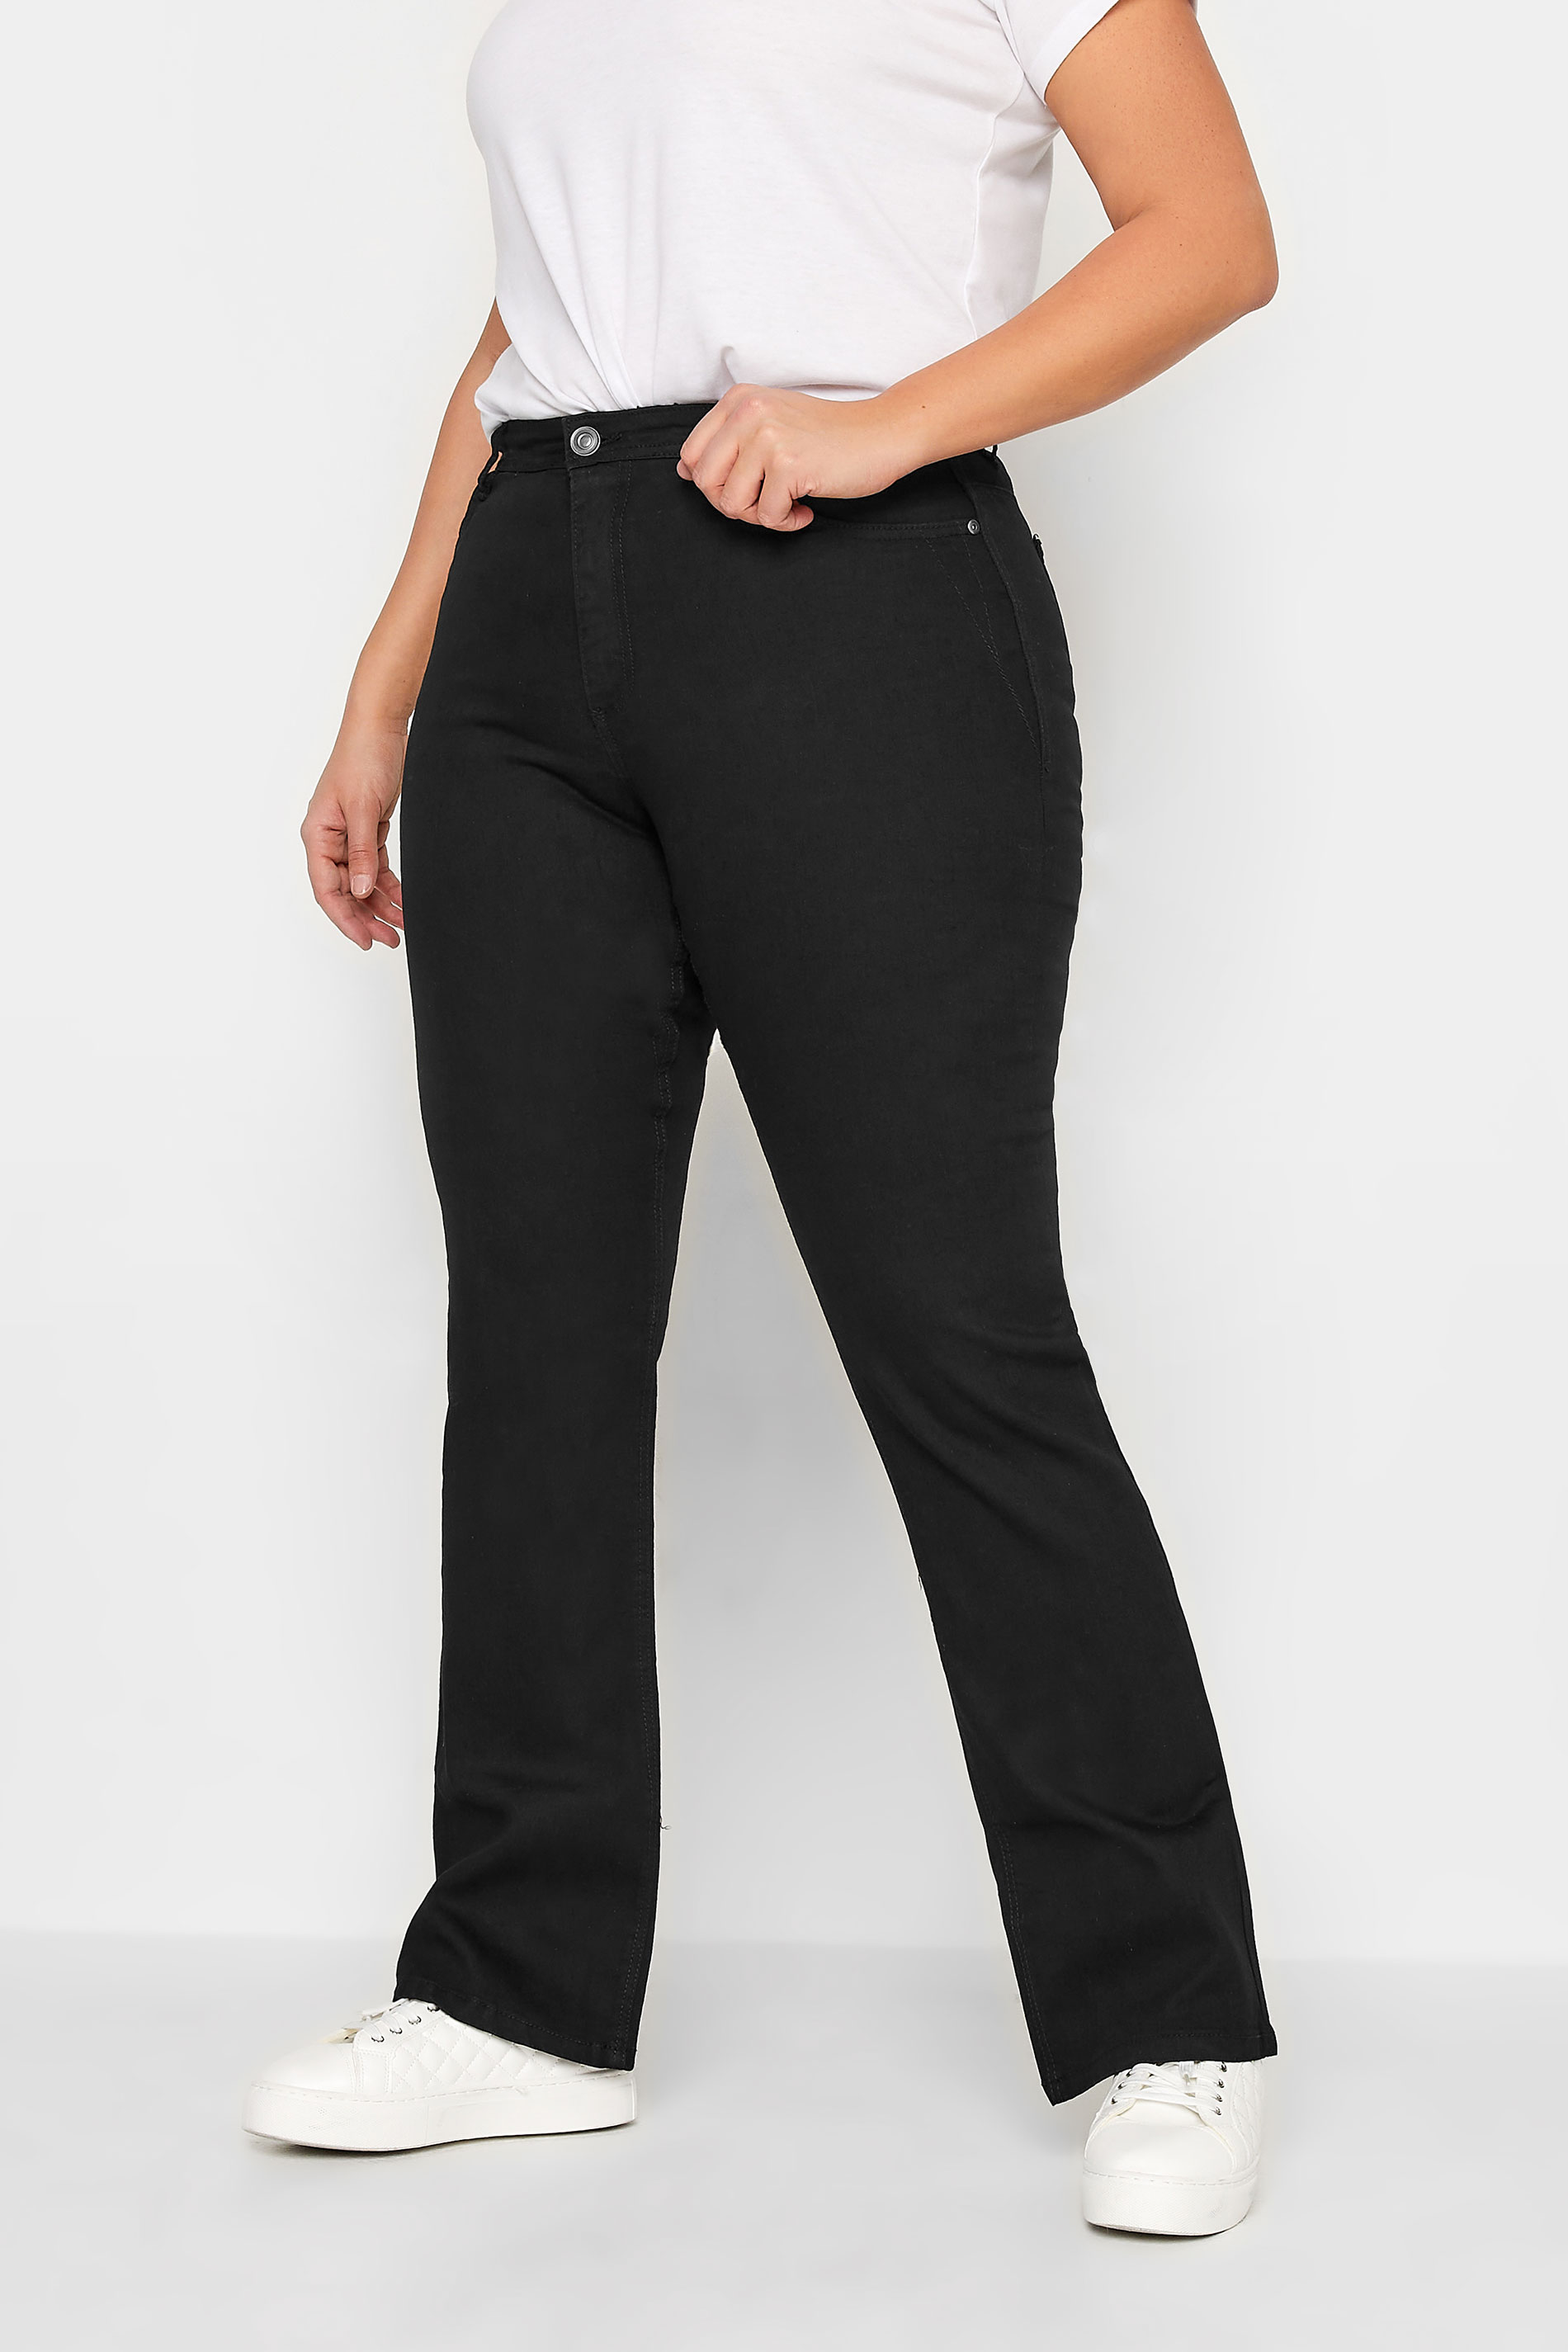 LTS Black RAE Bootcut Jeans | Long Tall Sally 1